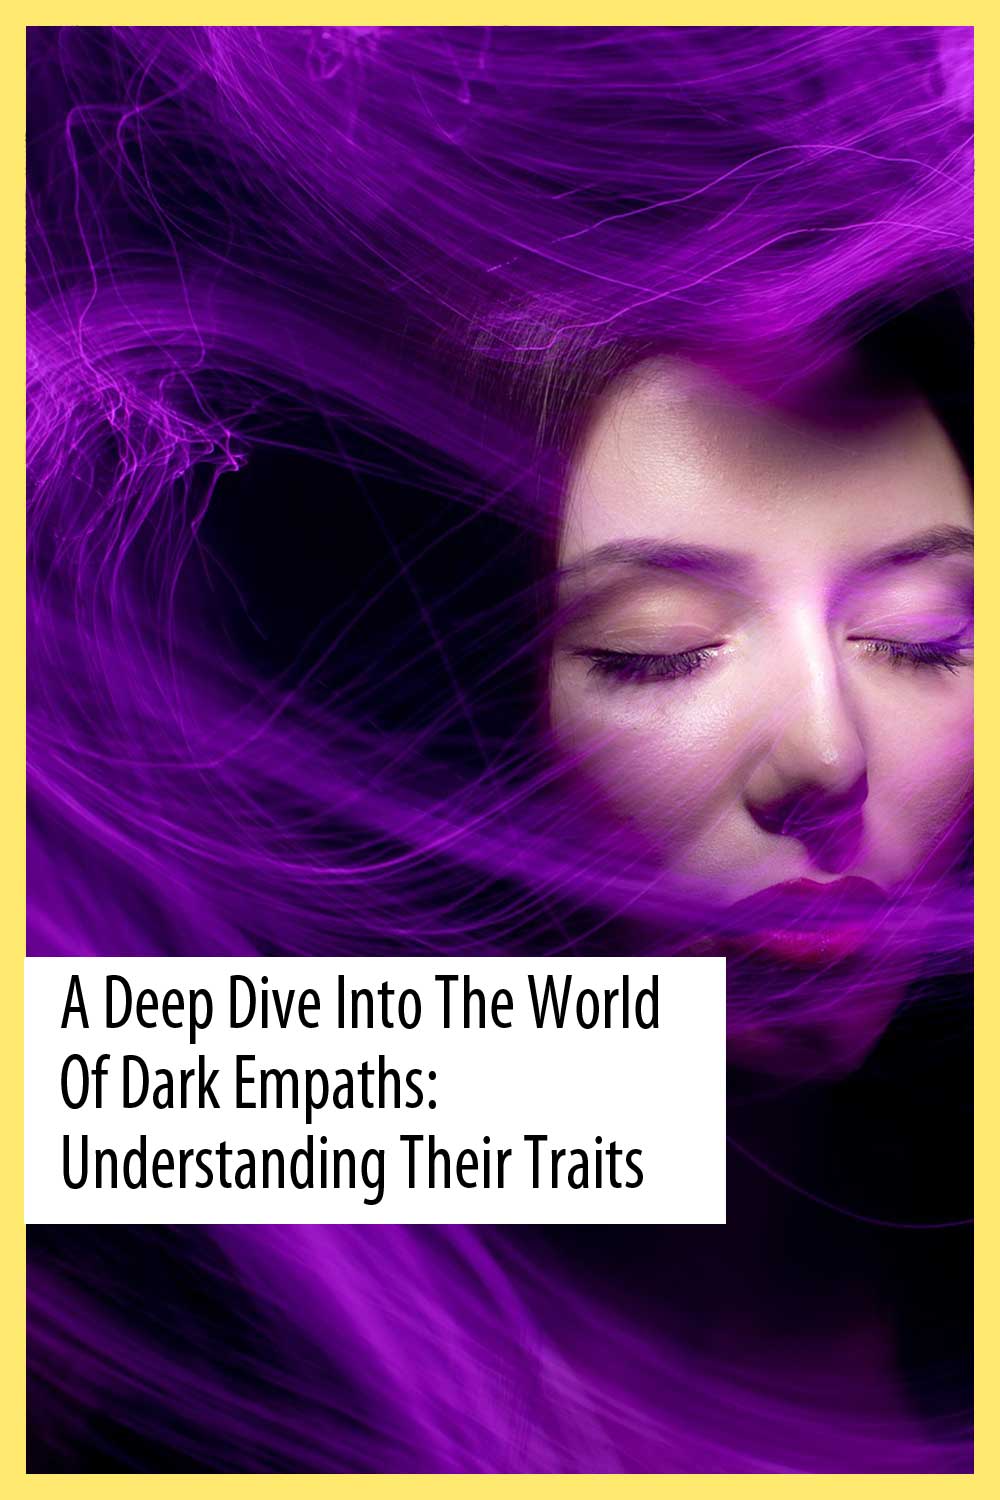 A Deep Dive into the World of Dark Empaths: Understanding Their Traits